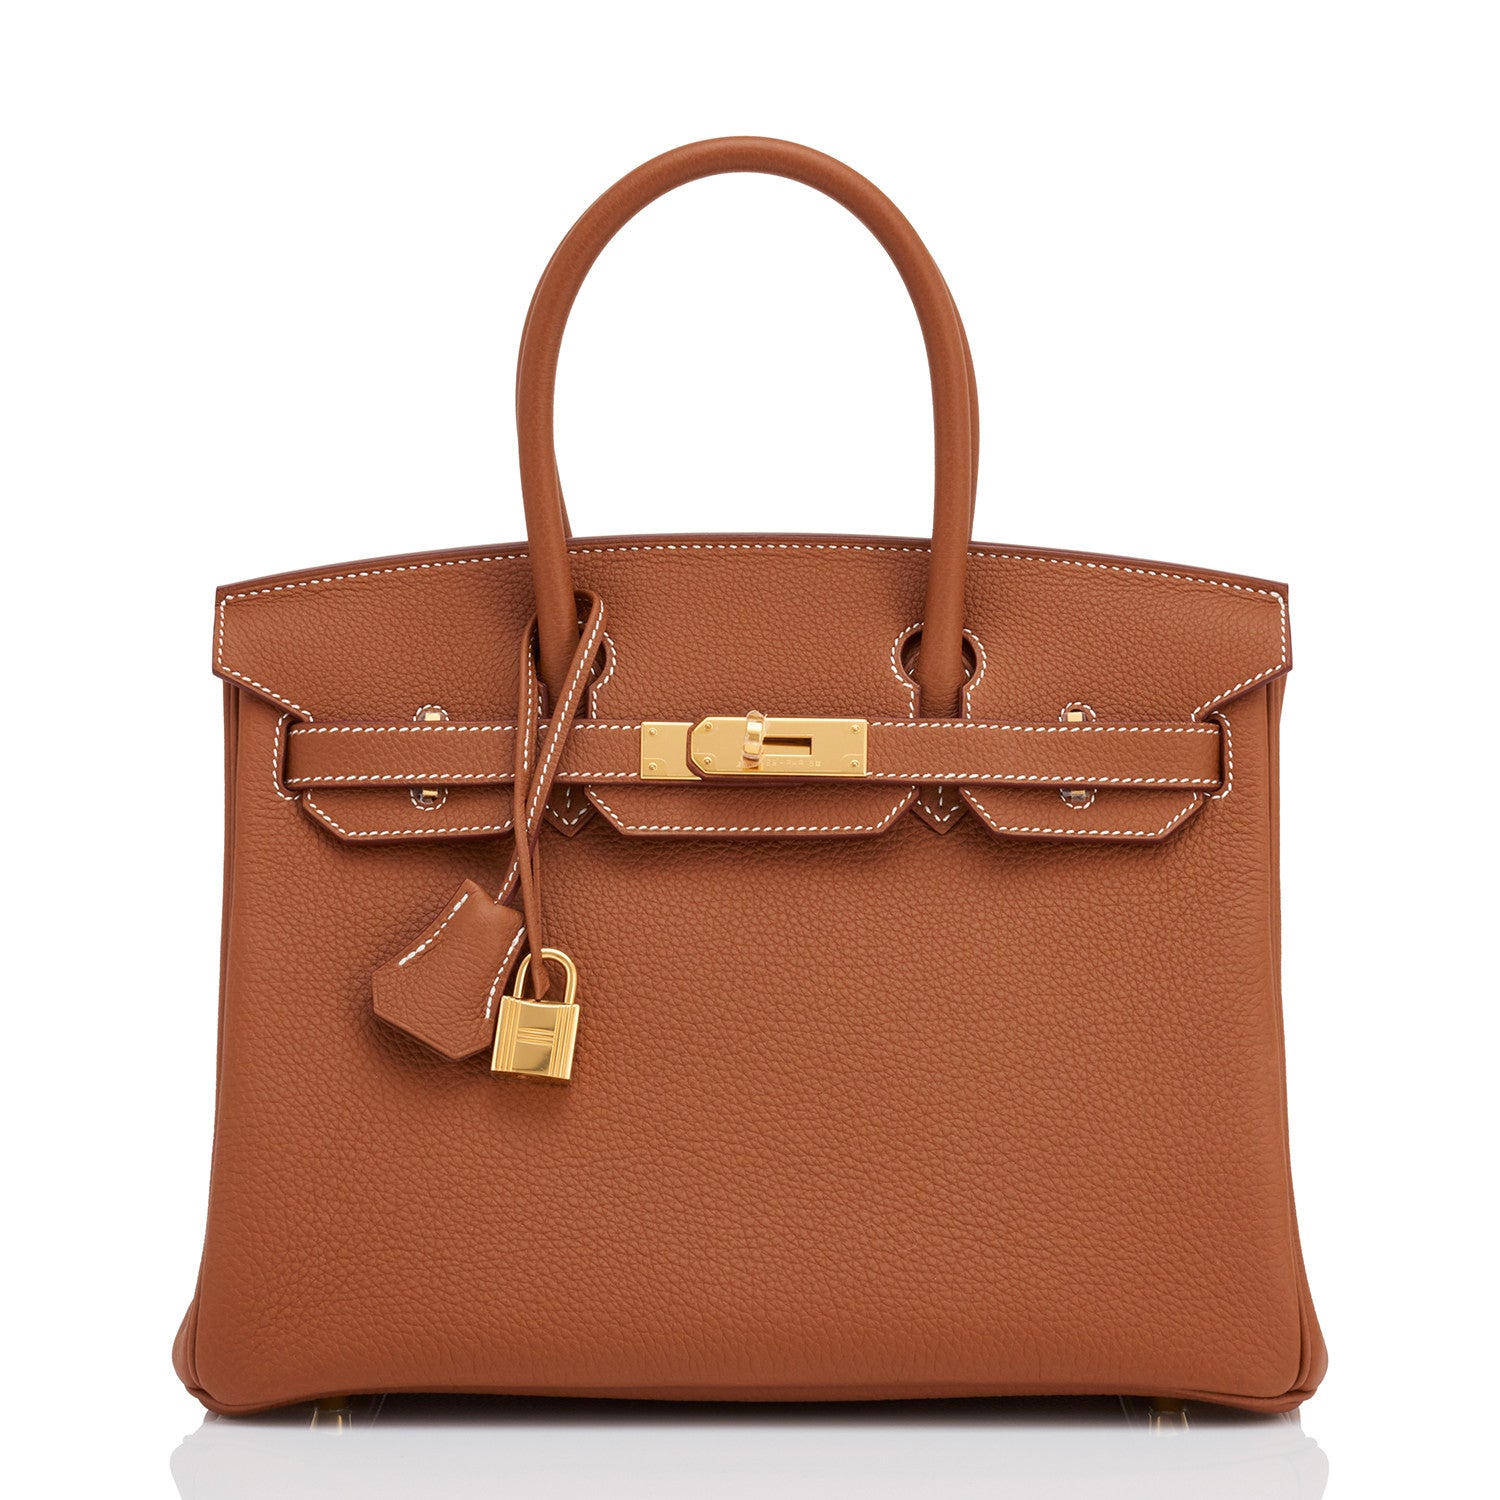 Hermes Orange Bag - love it!